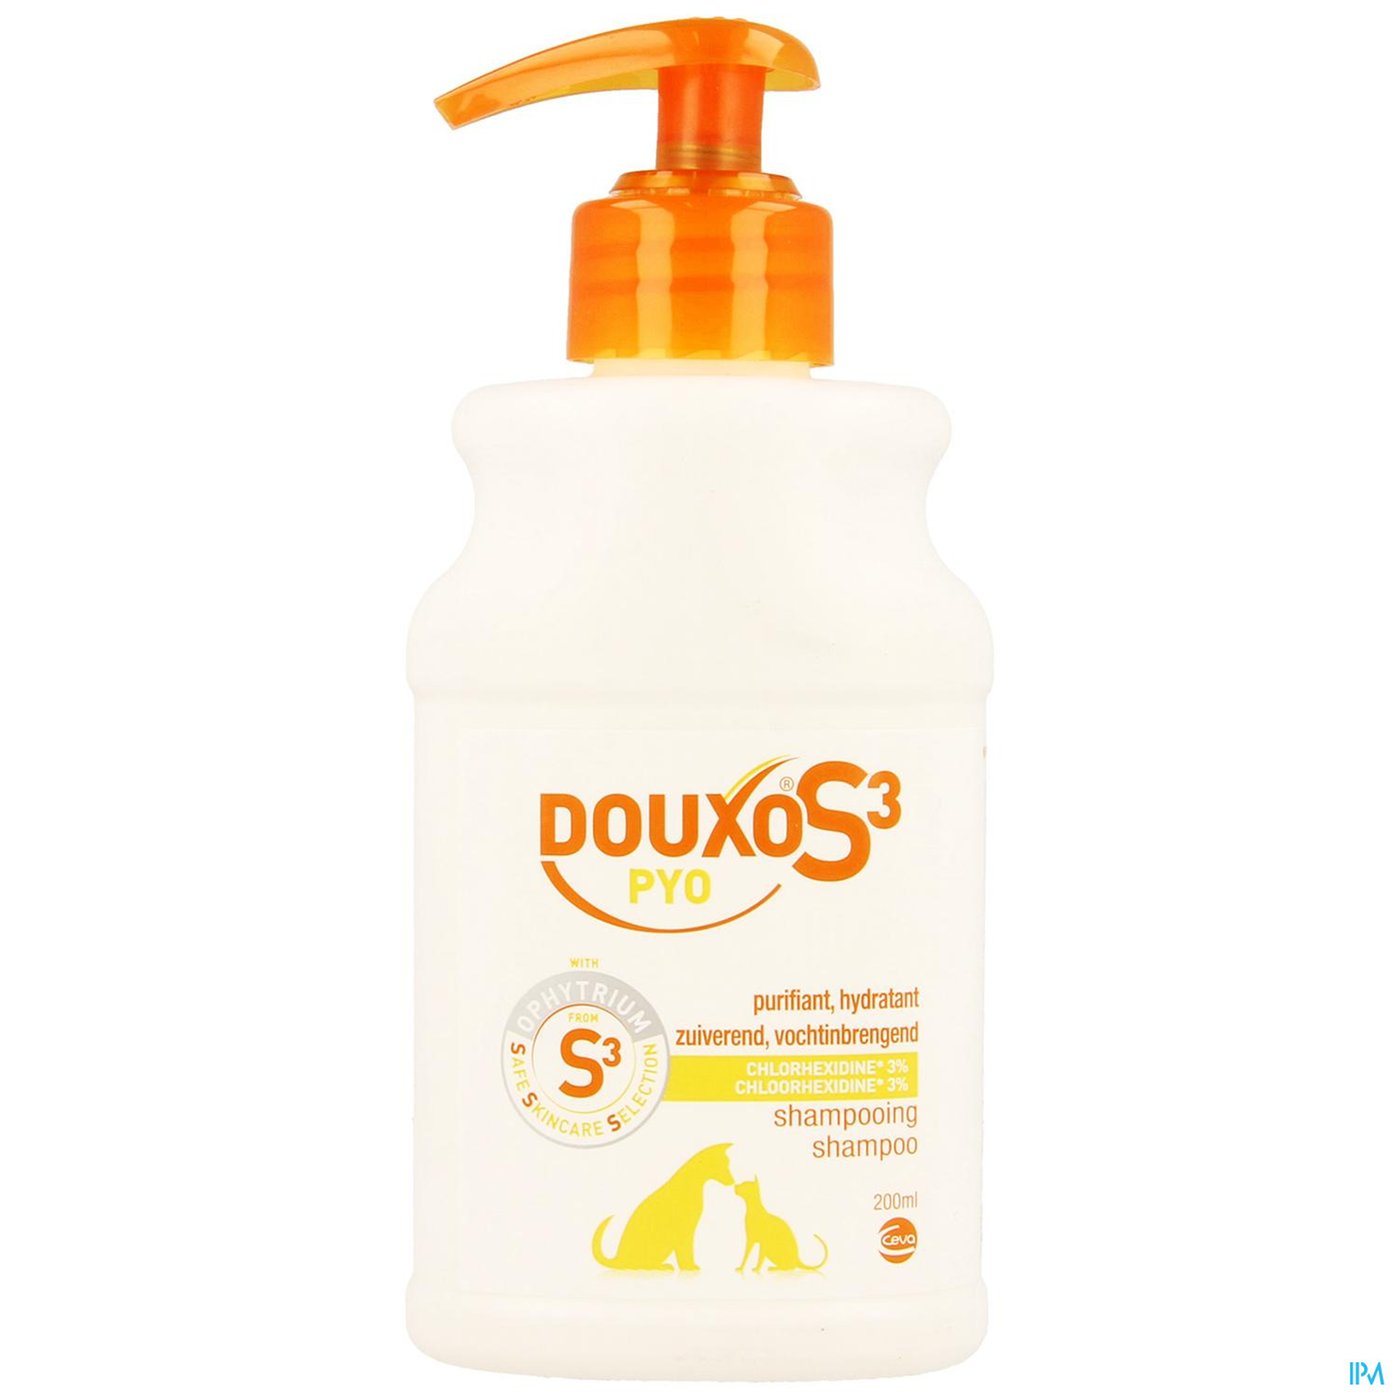 Douxo S3 Pyo Shampoo 200ml packshot